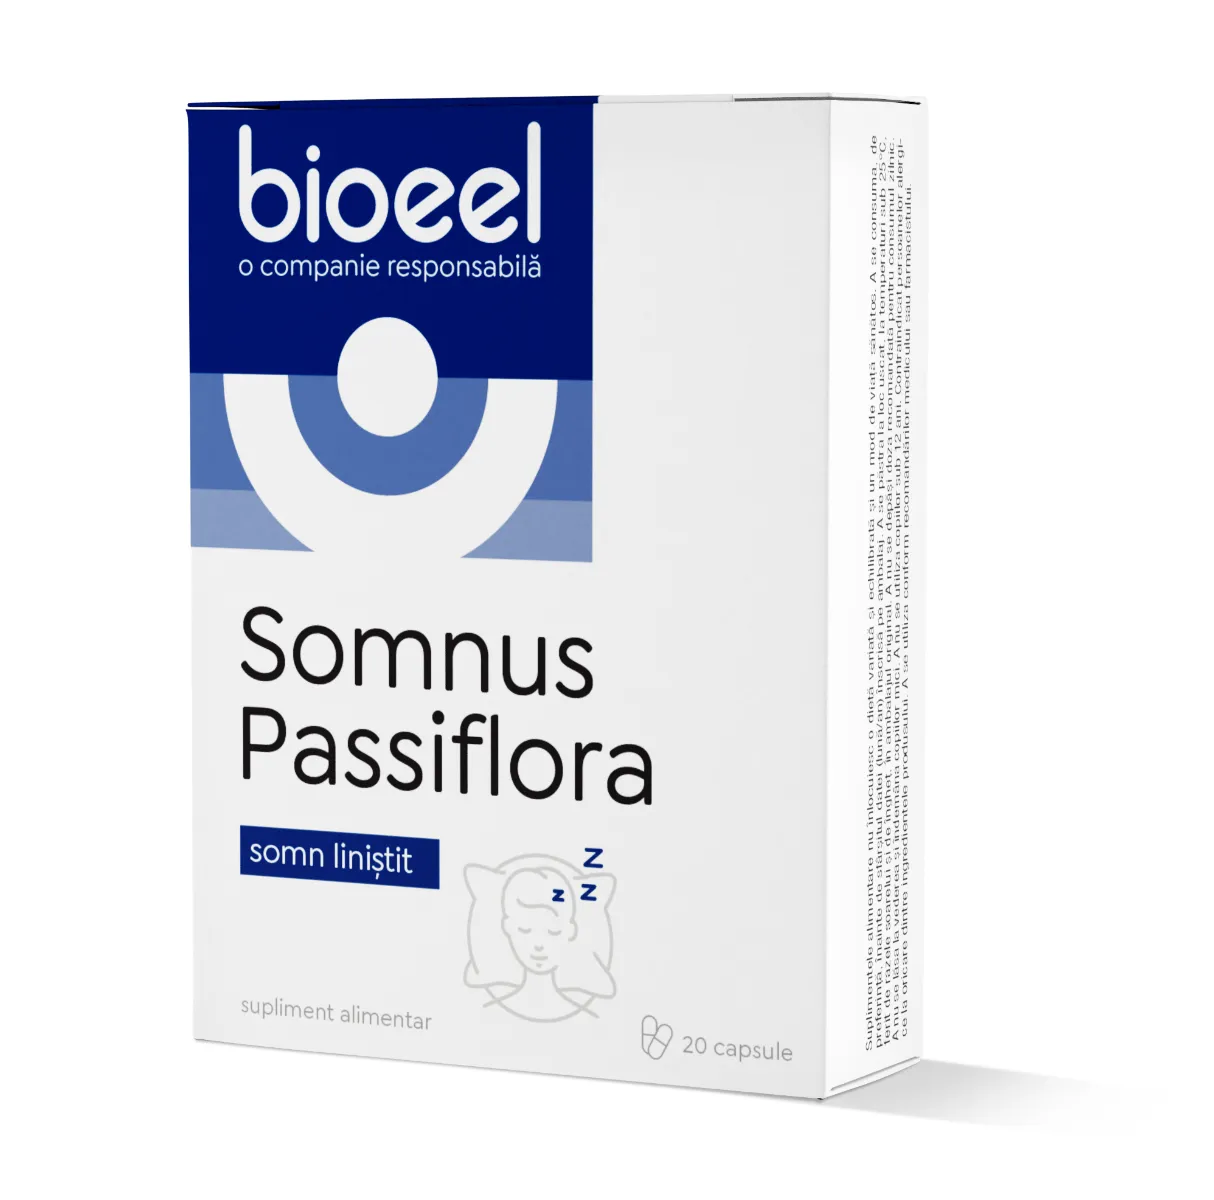 Somnus Passiflora, 20 capsule, Bioeel 